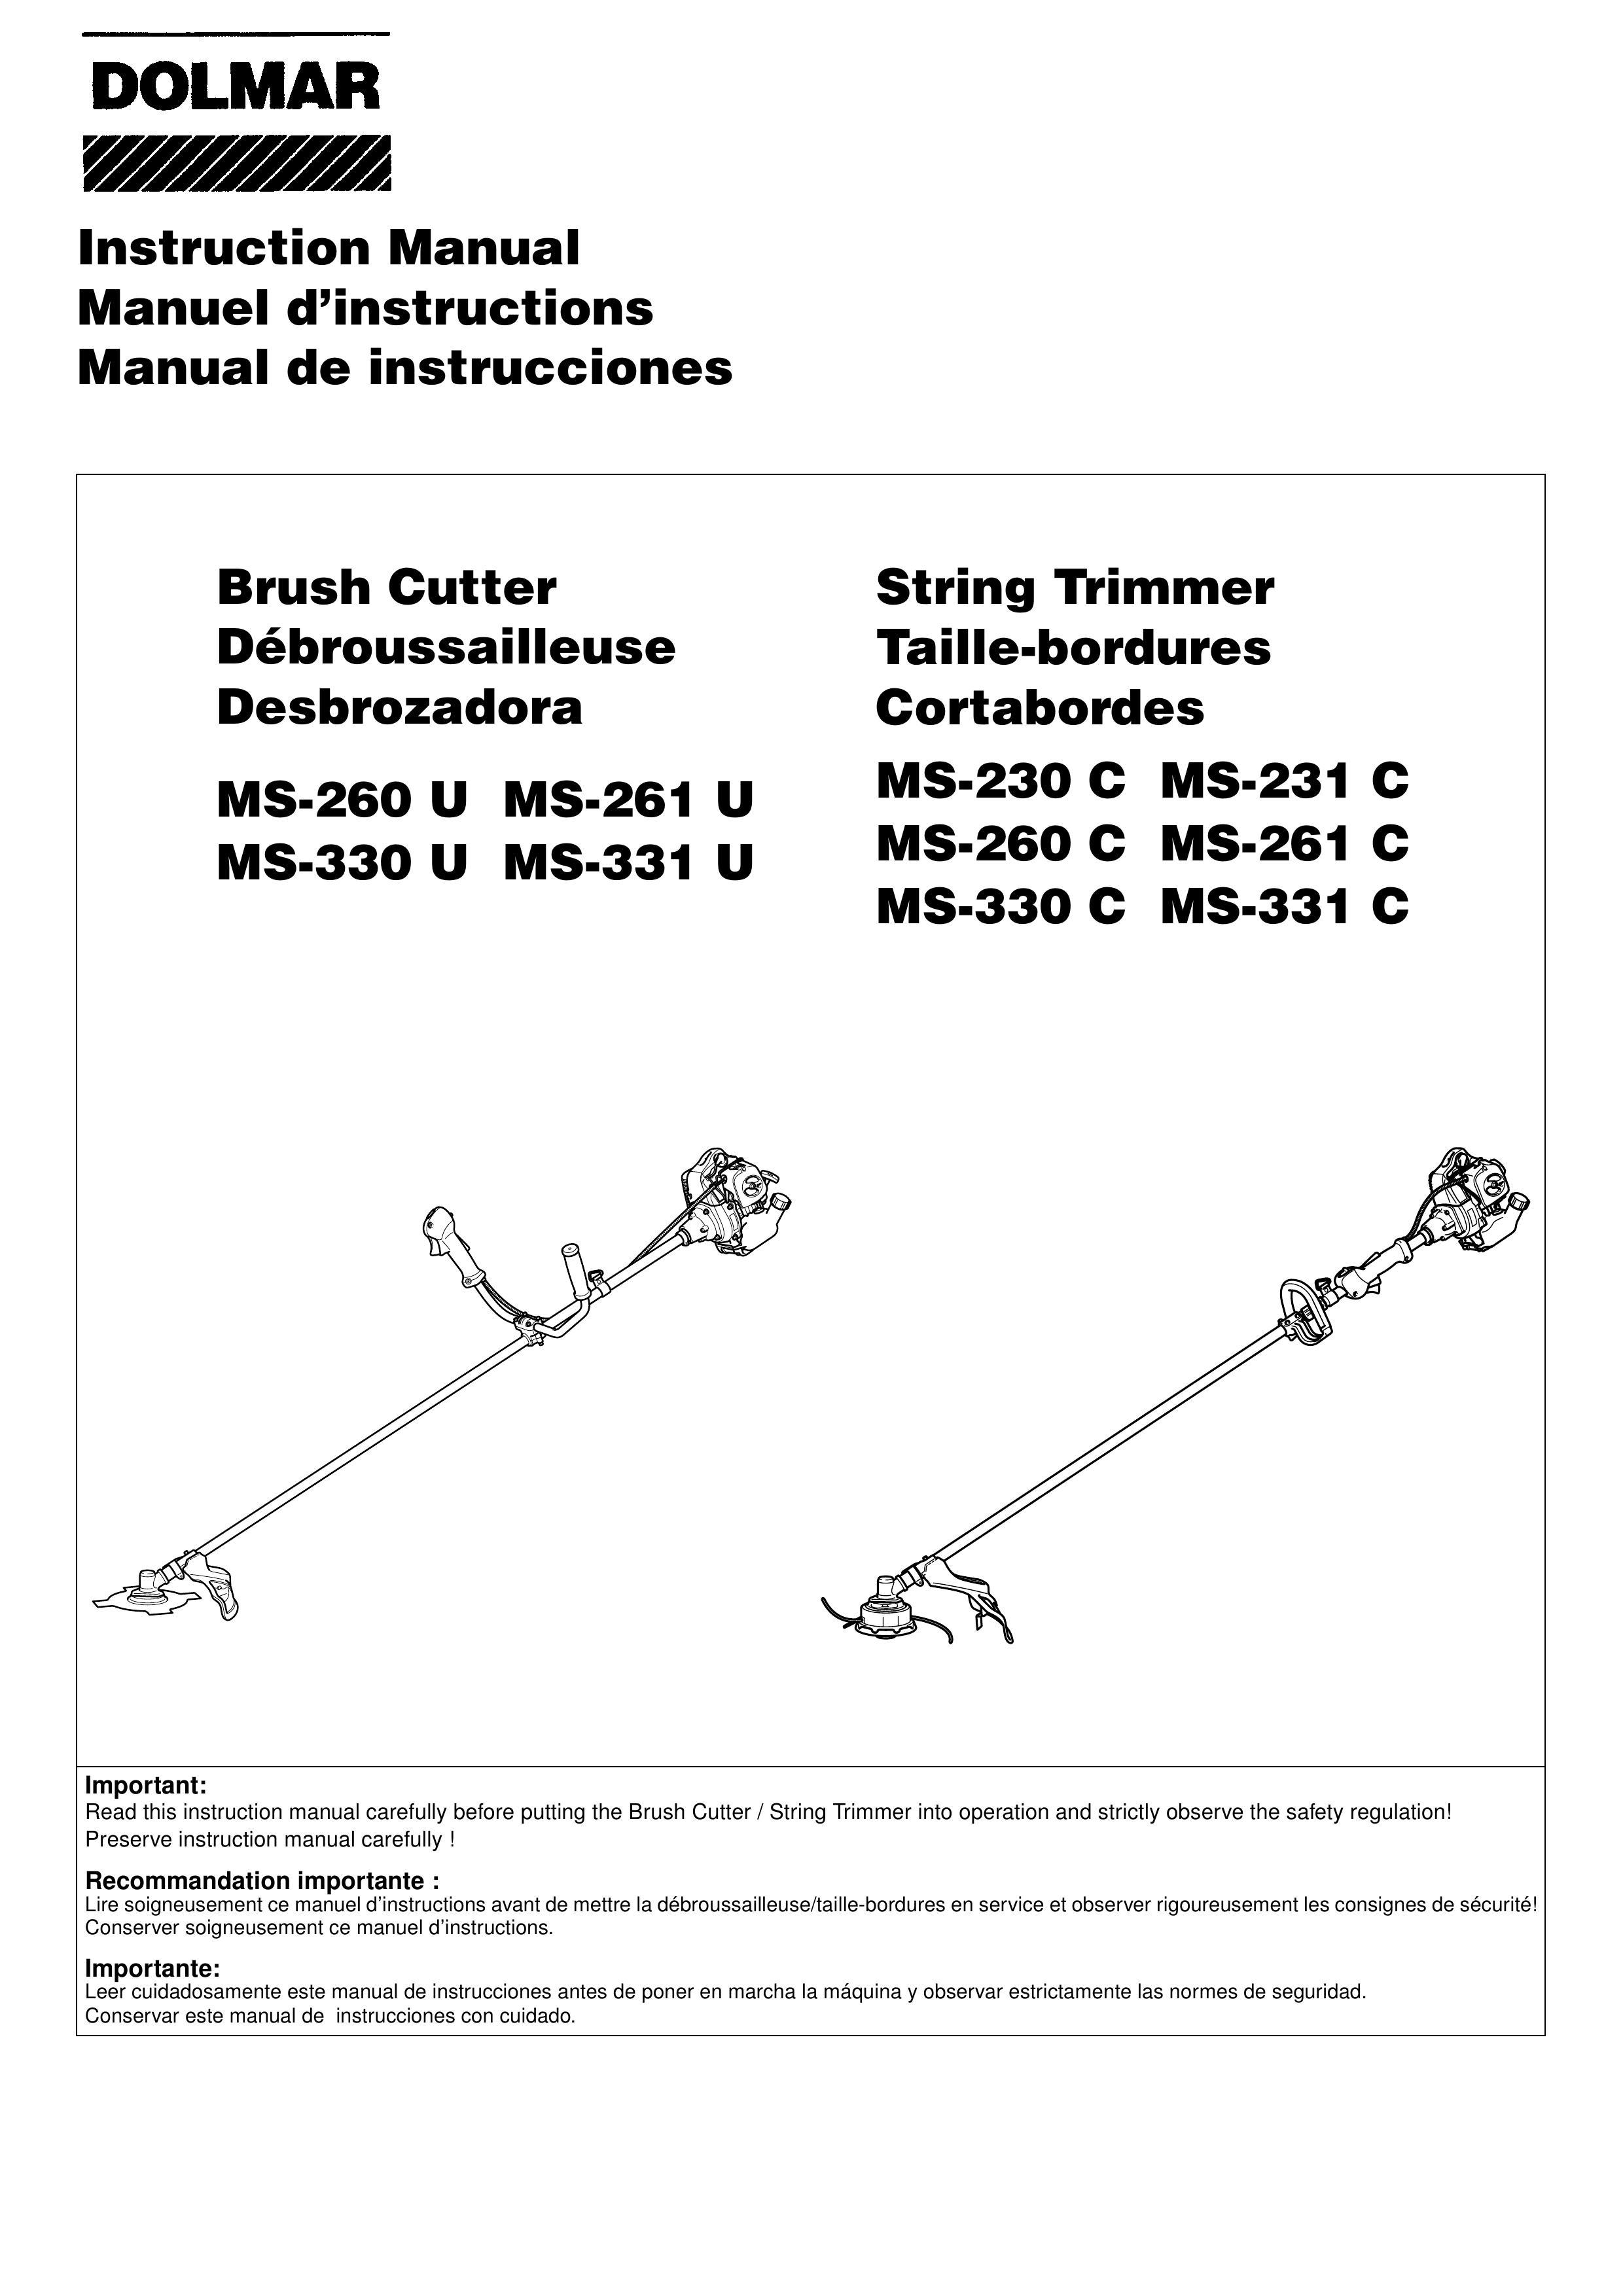 Dolmar MS-231 C Brush Cutter User Manual